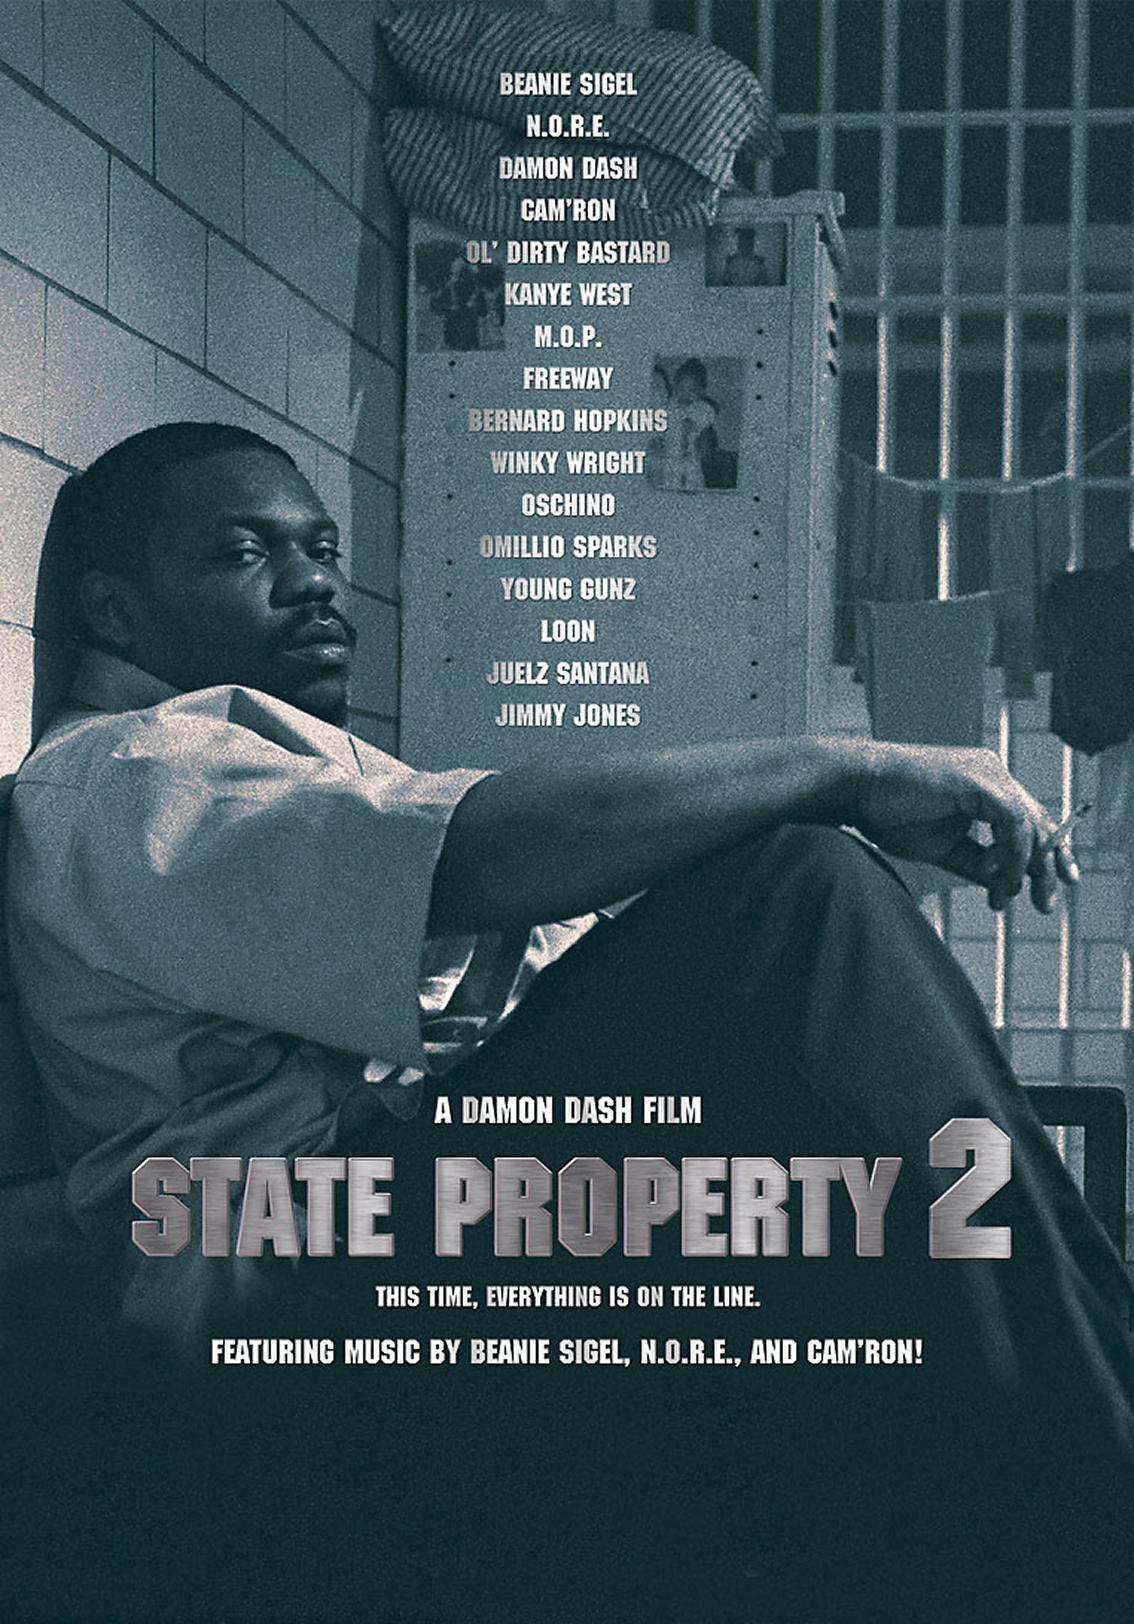 state property movie